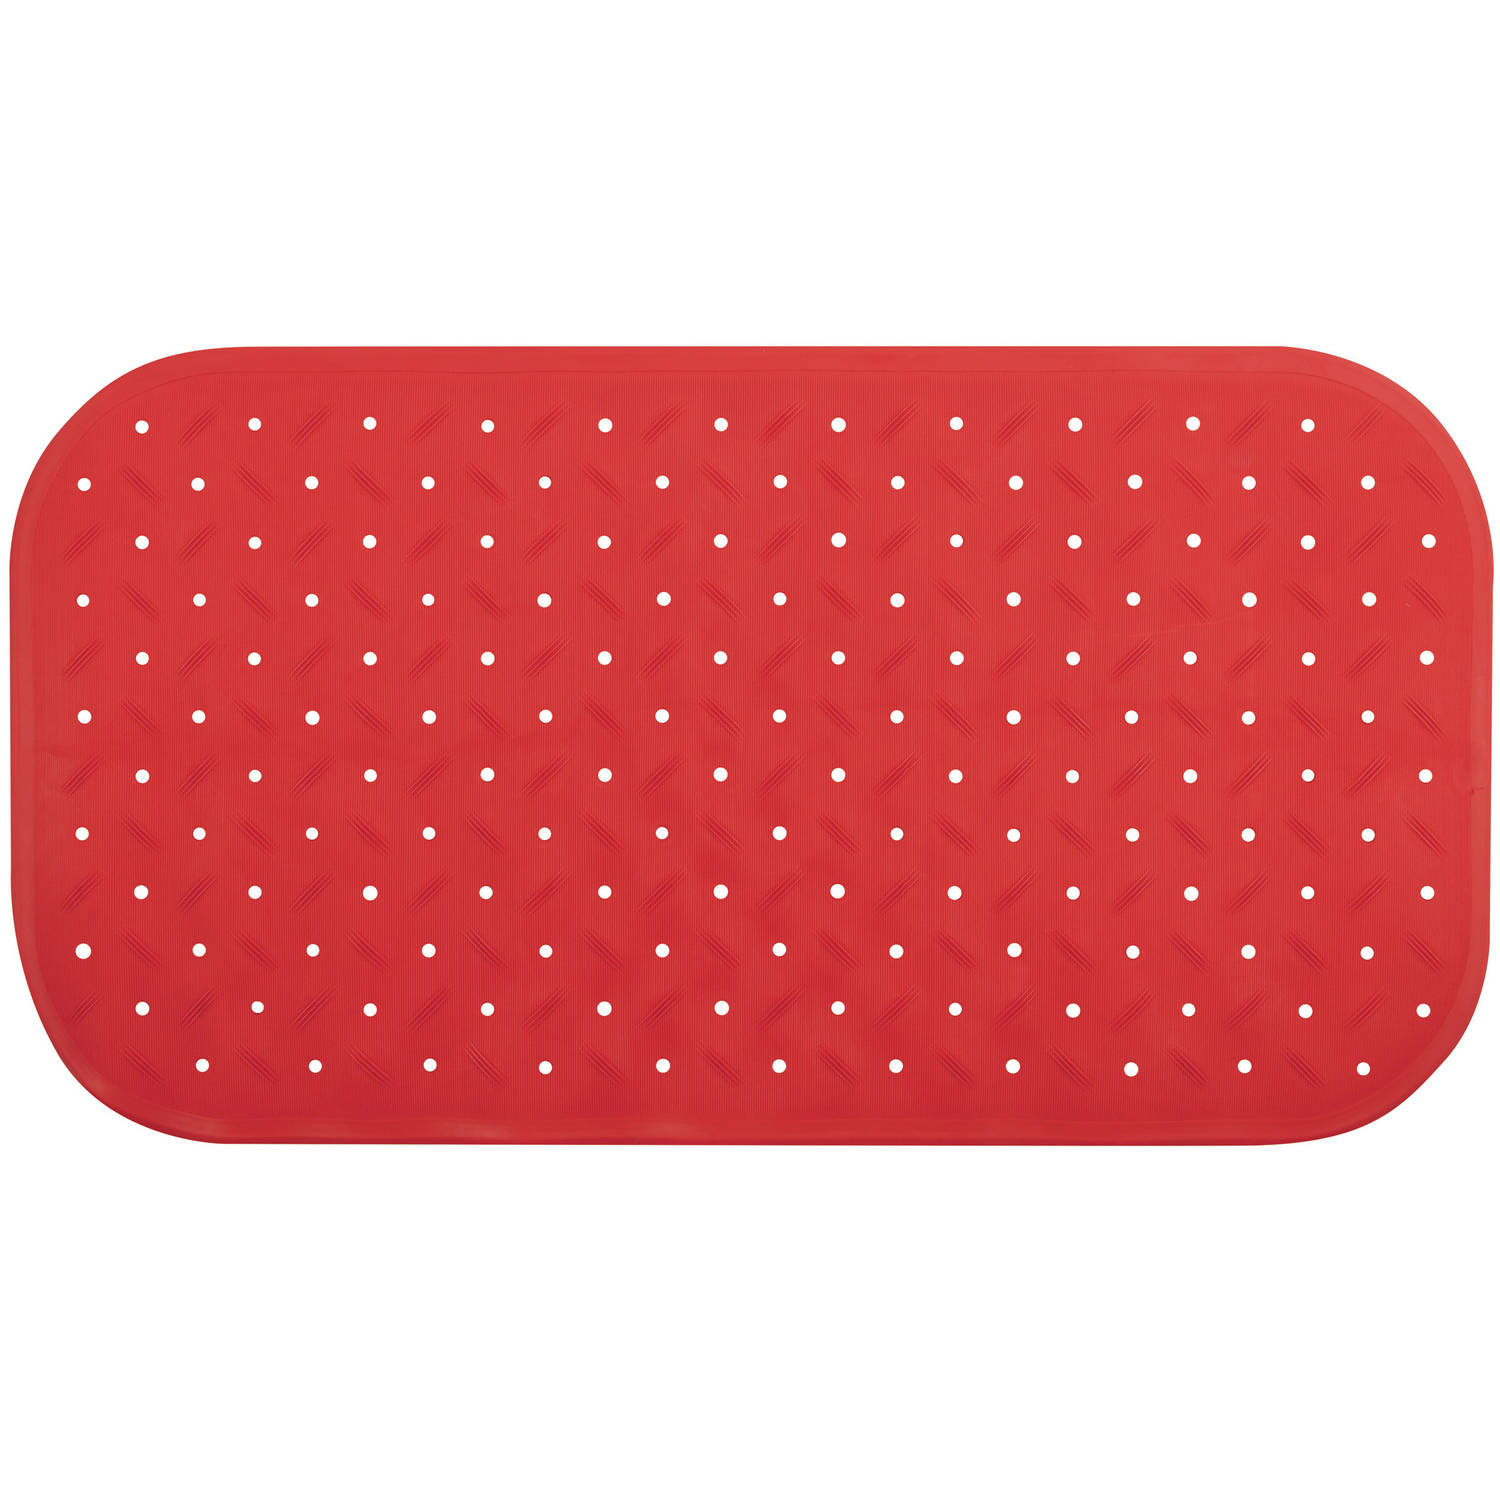 MSV Douche-bad anti-slip mat badkamer rubber rood 36 x 65 cm Badmatjes